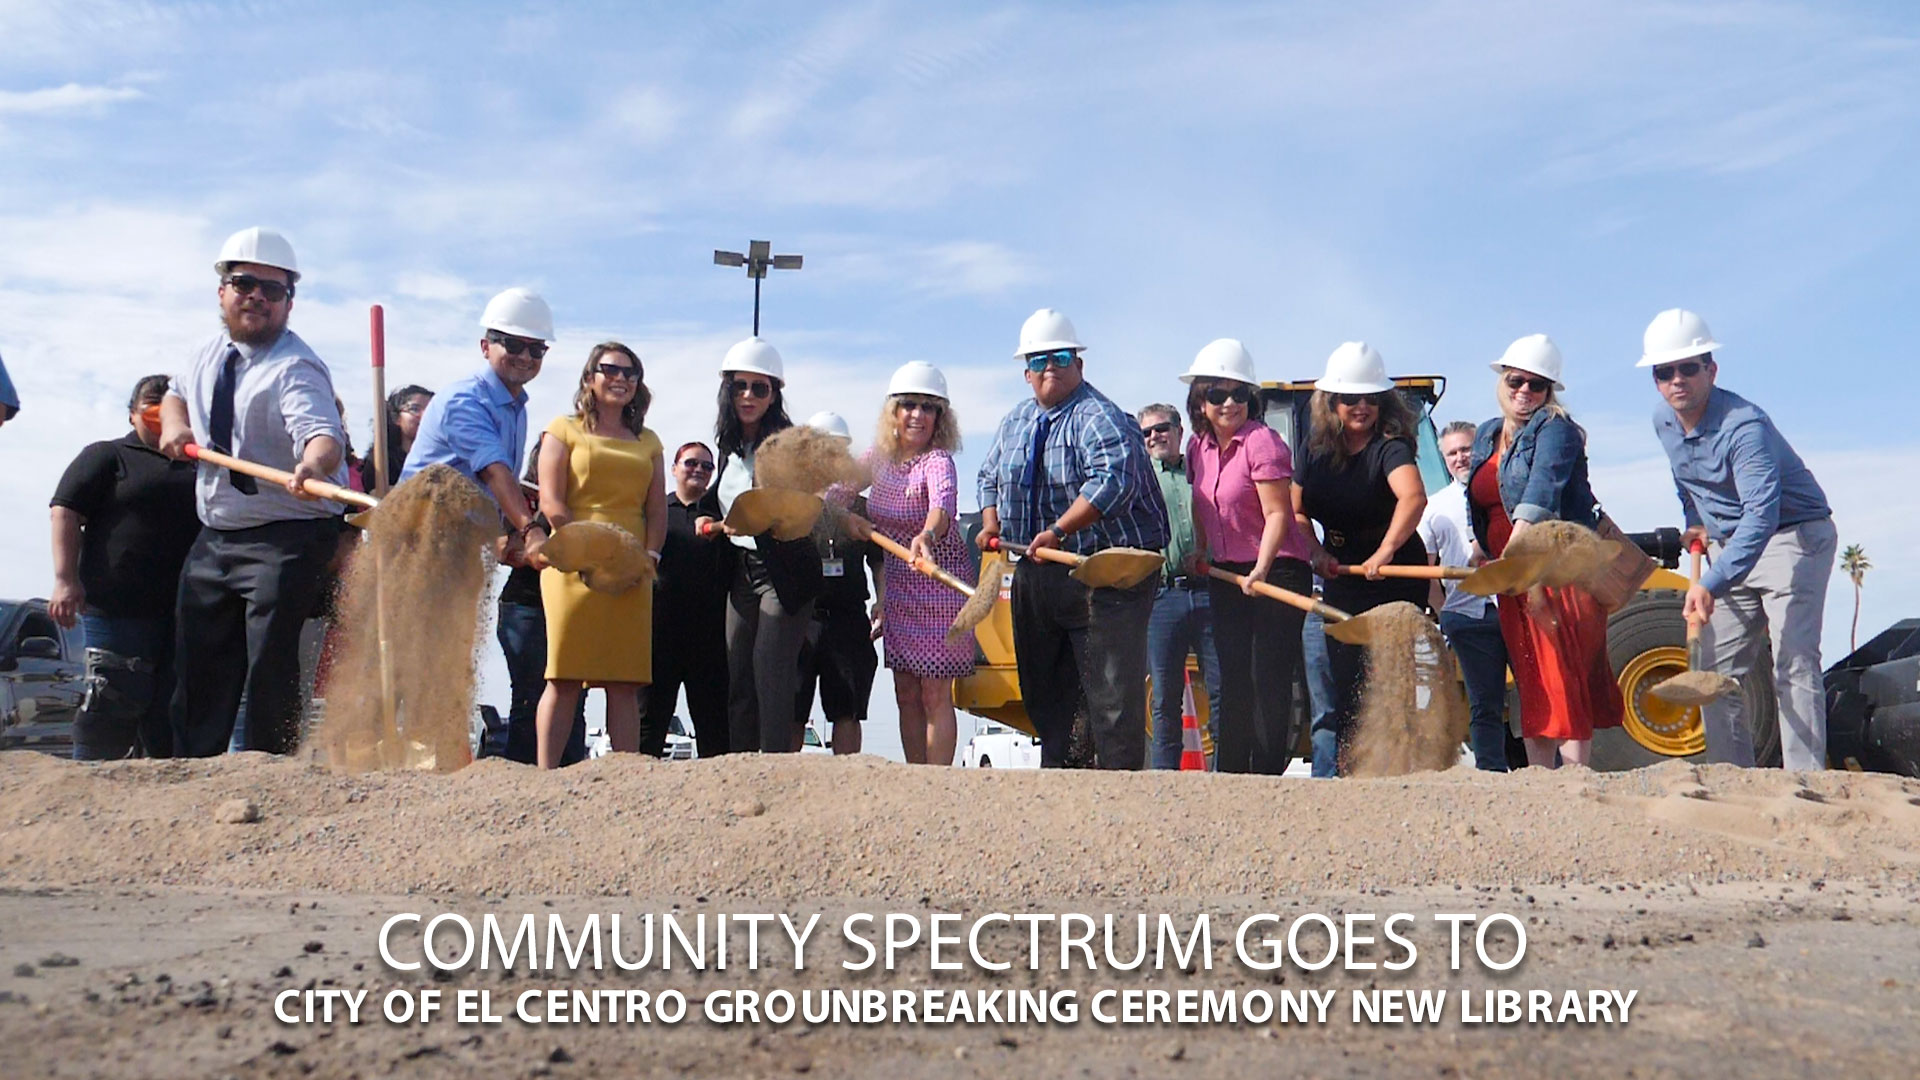 City of El Centro Groundbreaking Ceremony New Library